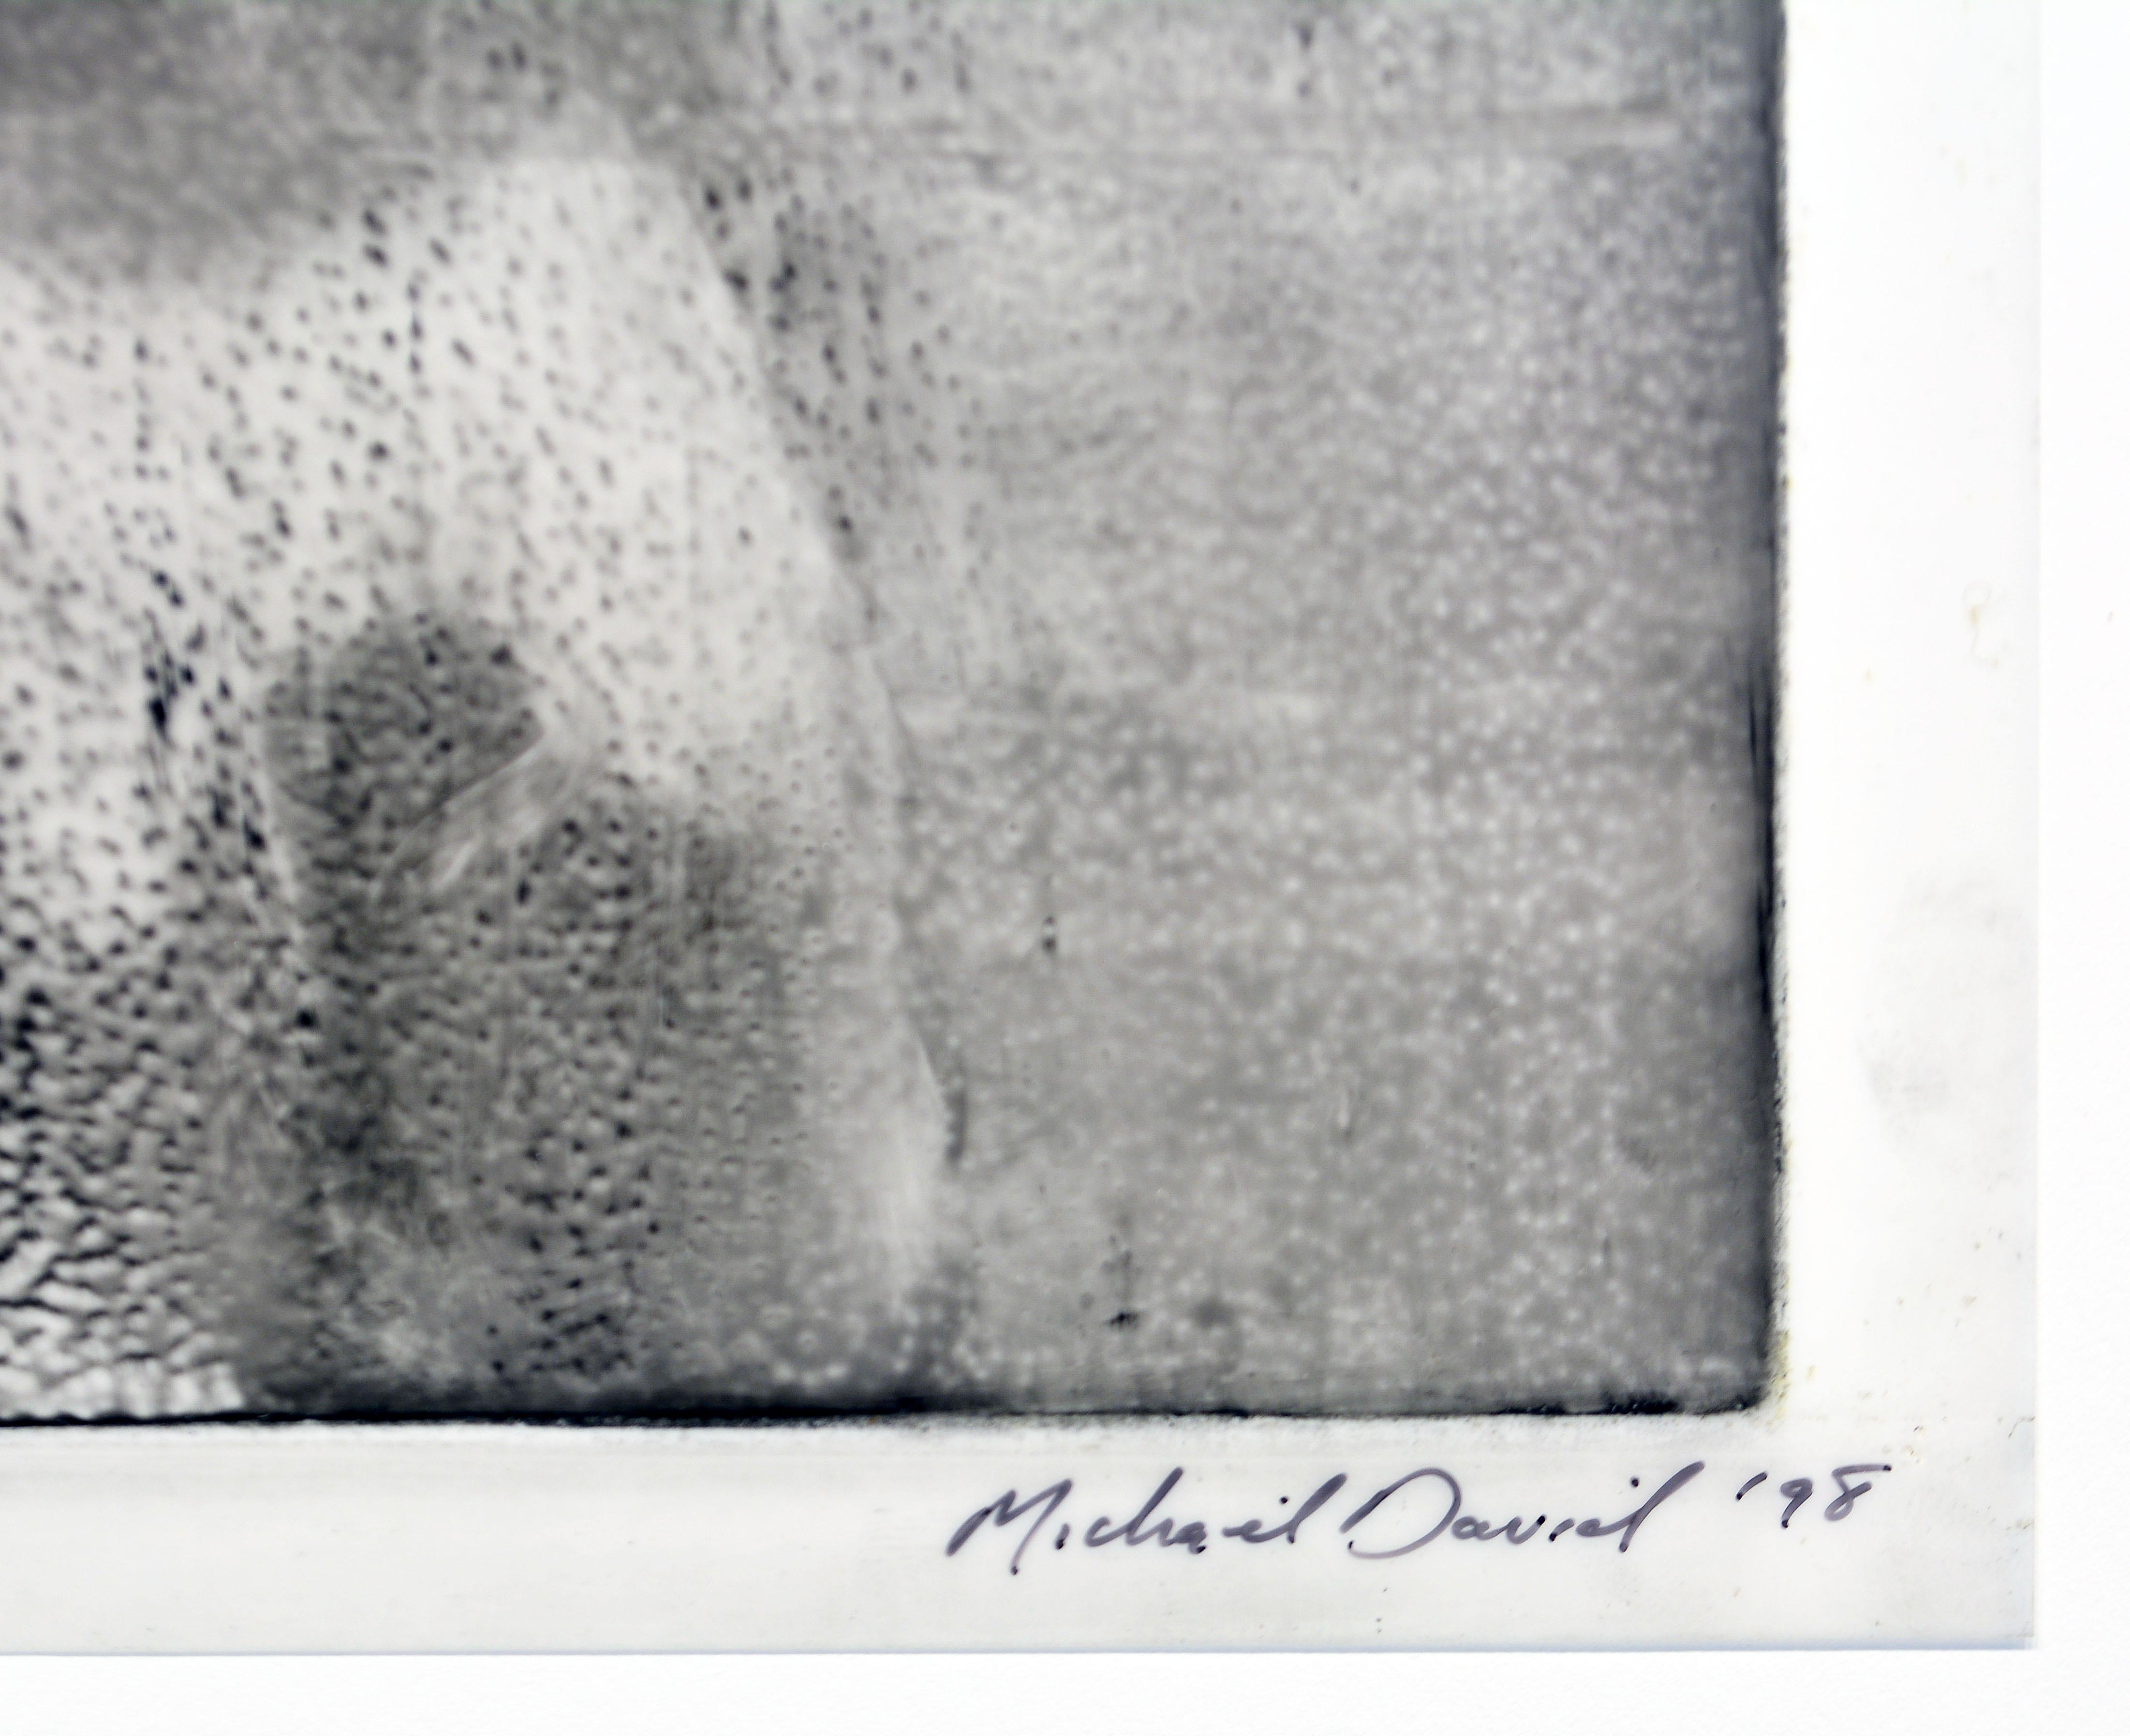 Michael David US b. 1954 « Small Shower III » Photo Based Ink on Mylar Male Nude Bon état - En vente à Ft. Lauderdale, FL